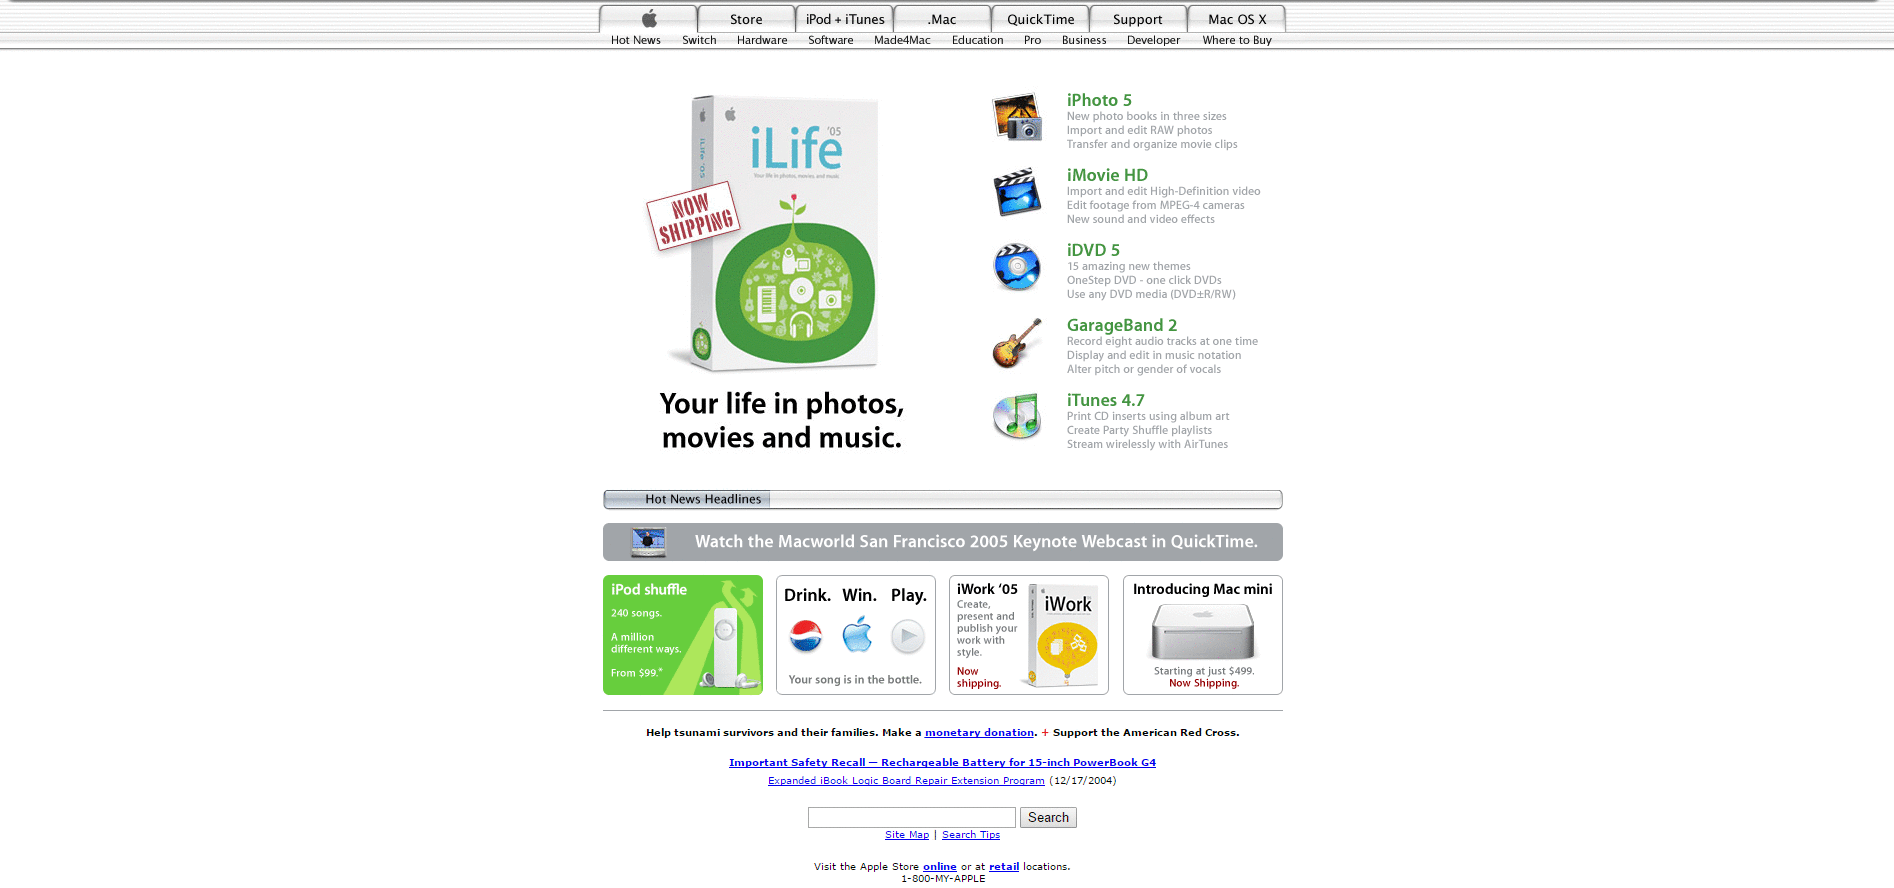 apple.com Website Design in 2005